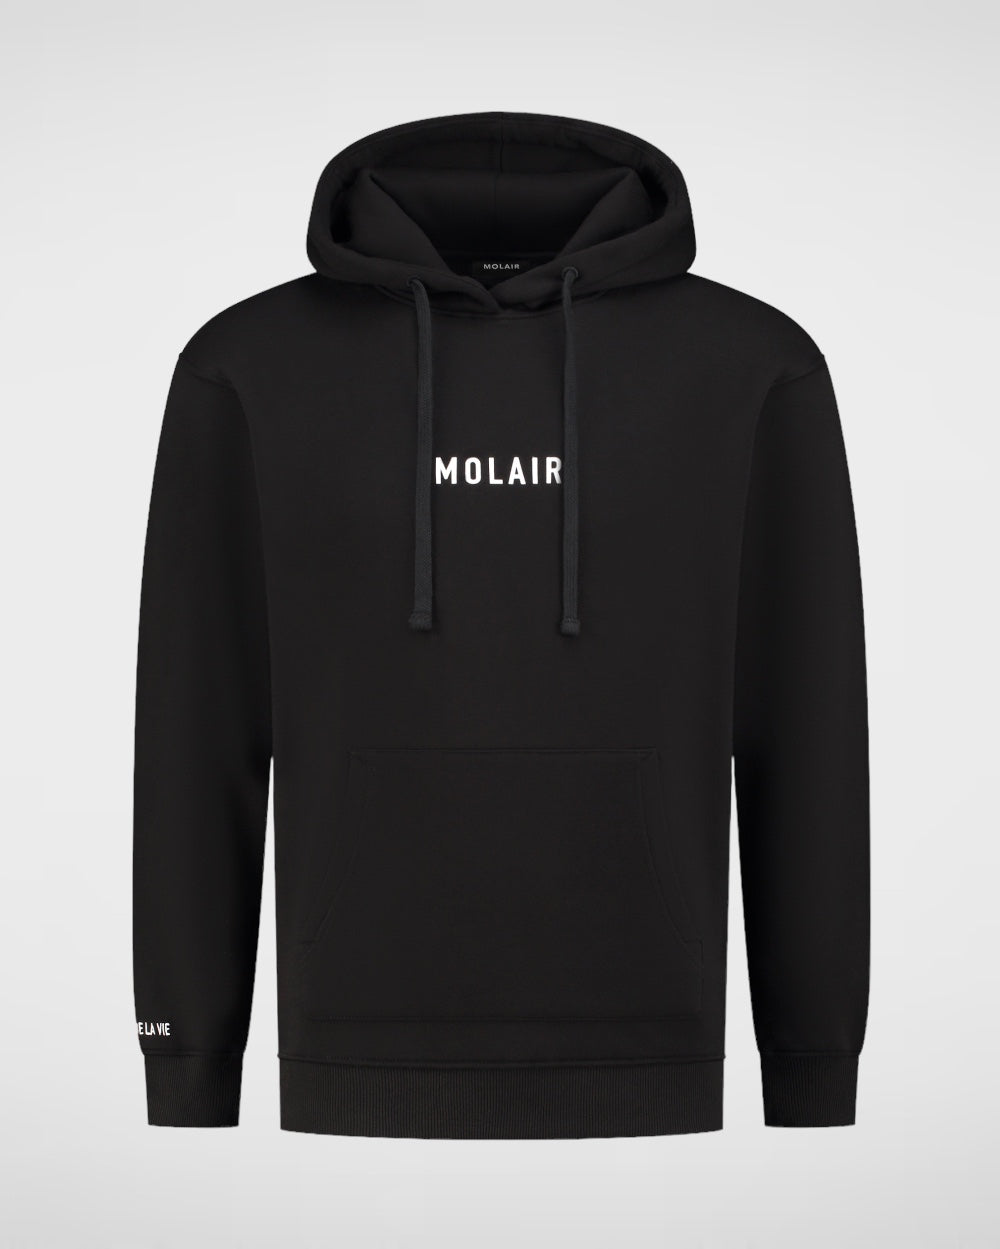 Molair Tracksuit Black